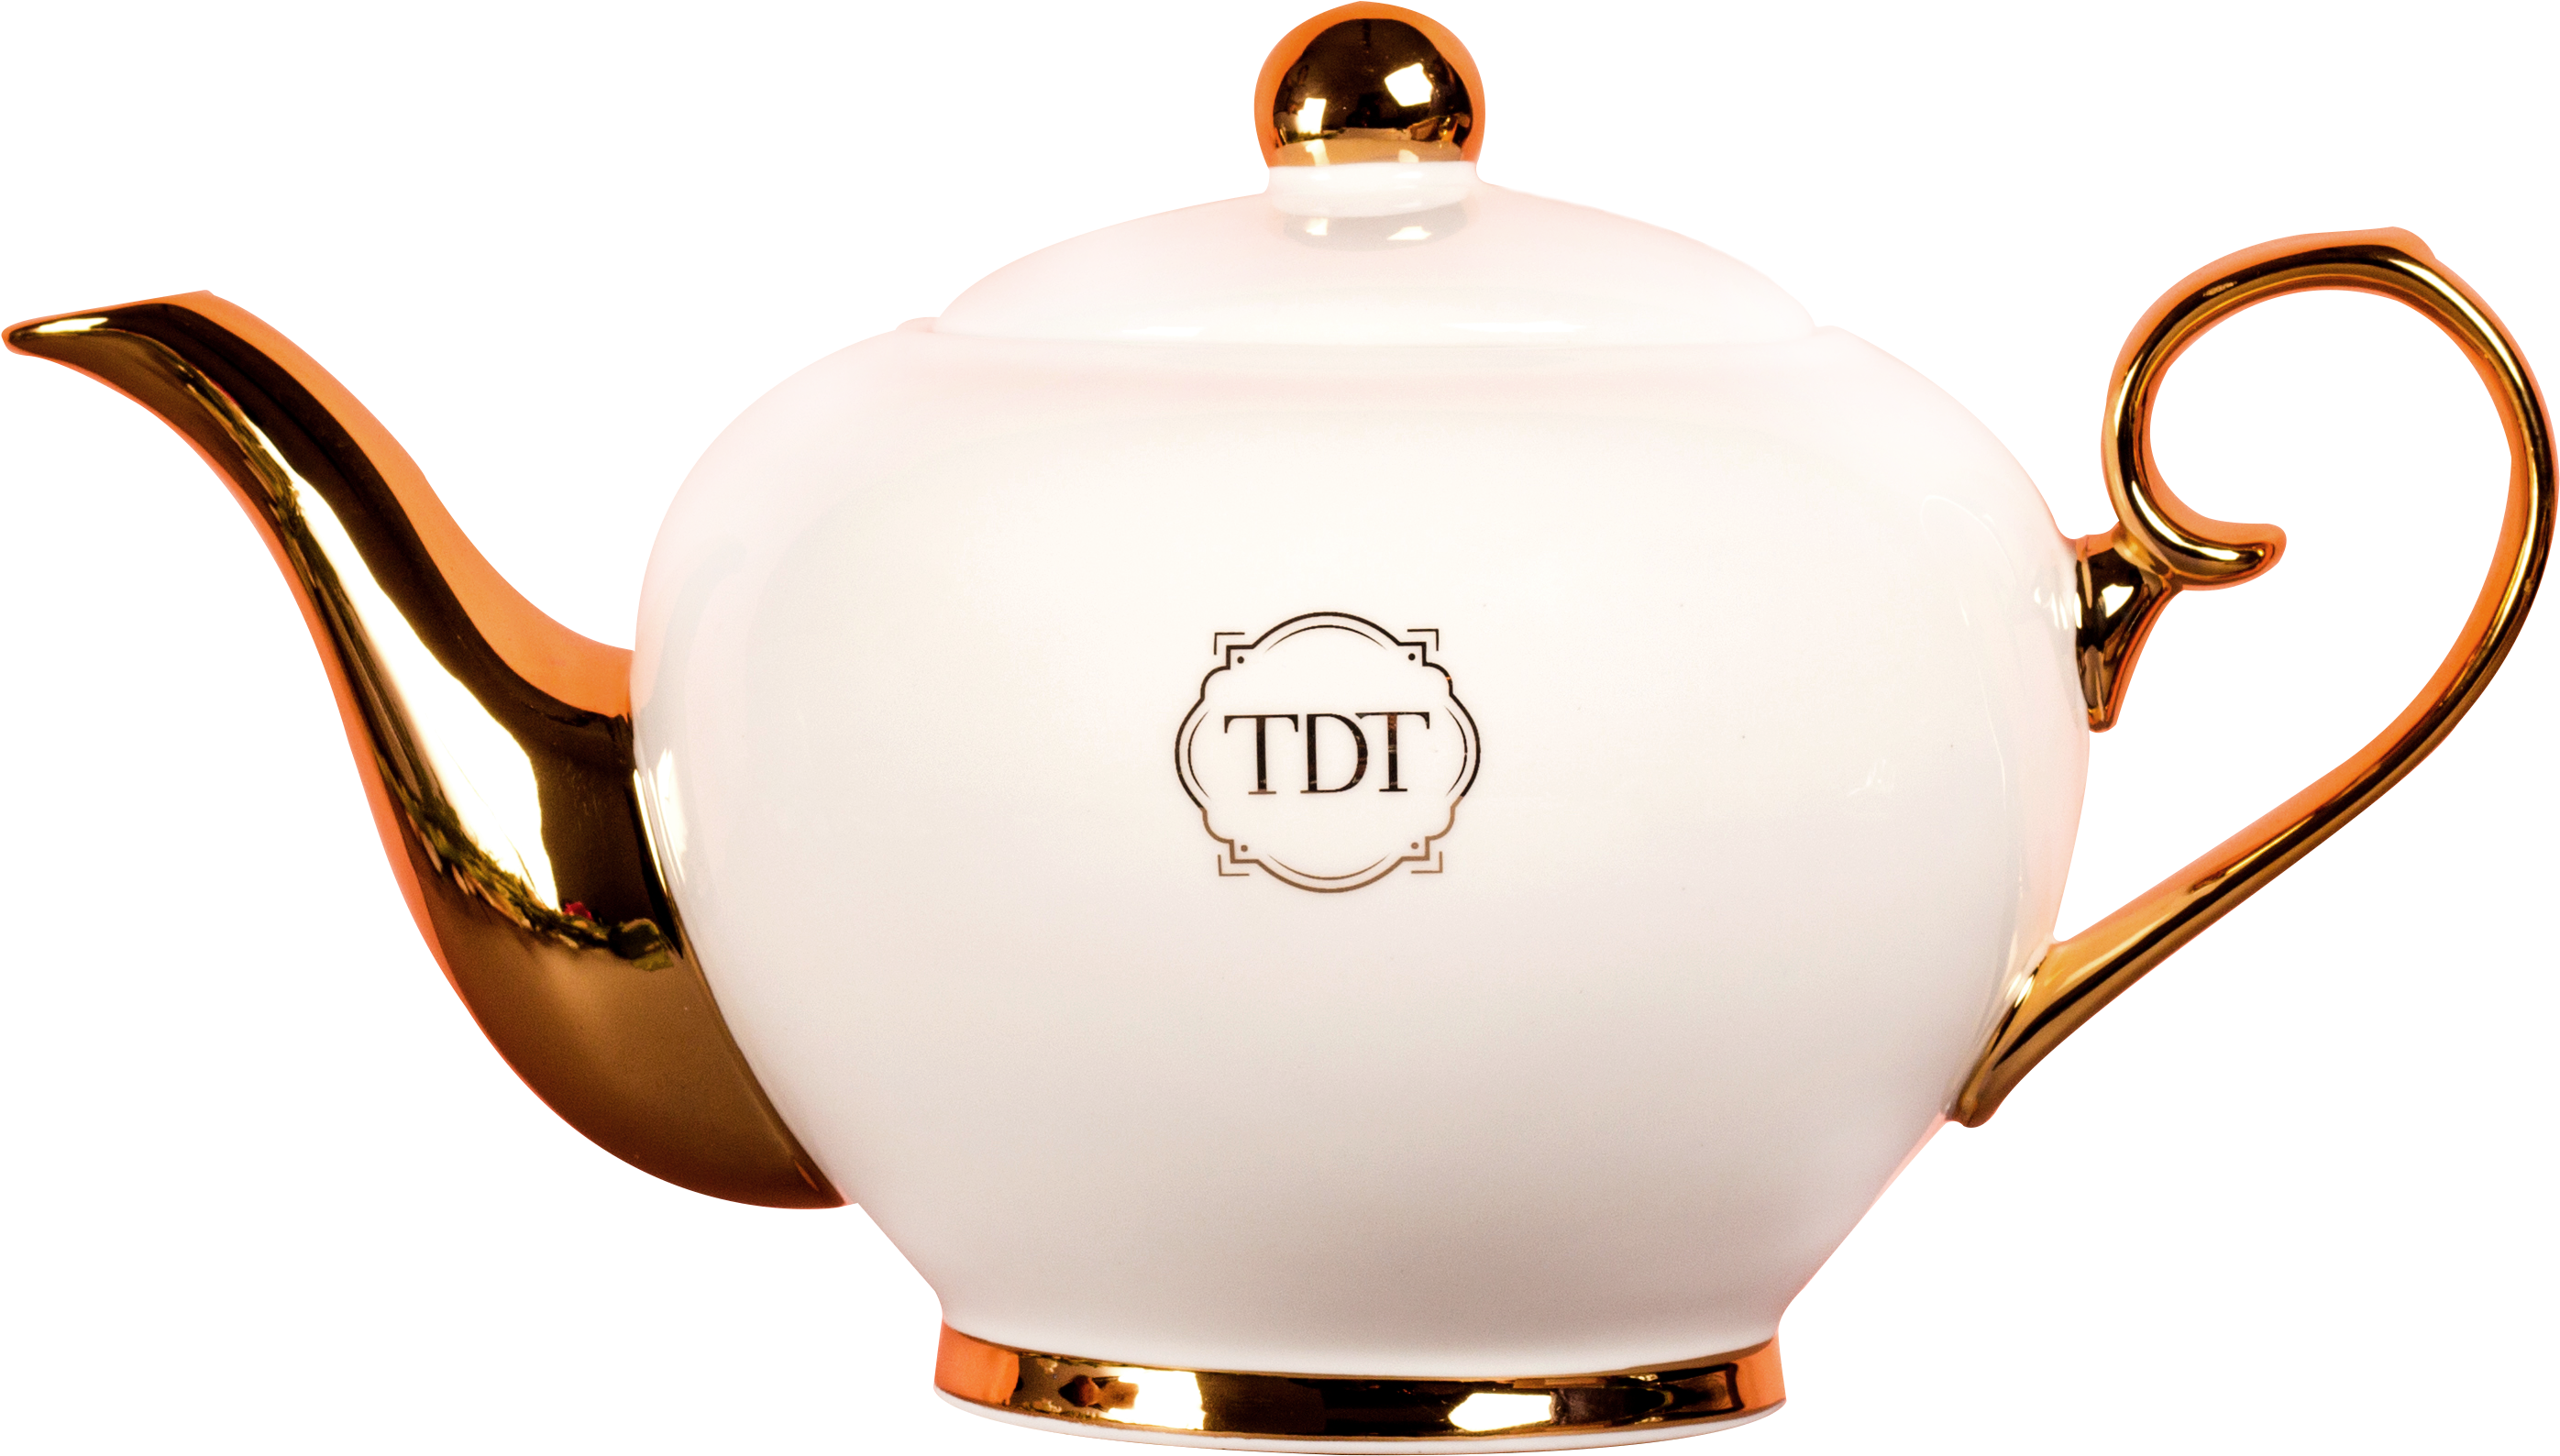 Pot1 - Teapot (4338x2892)